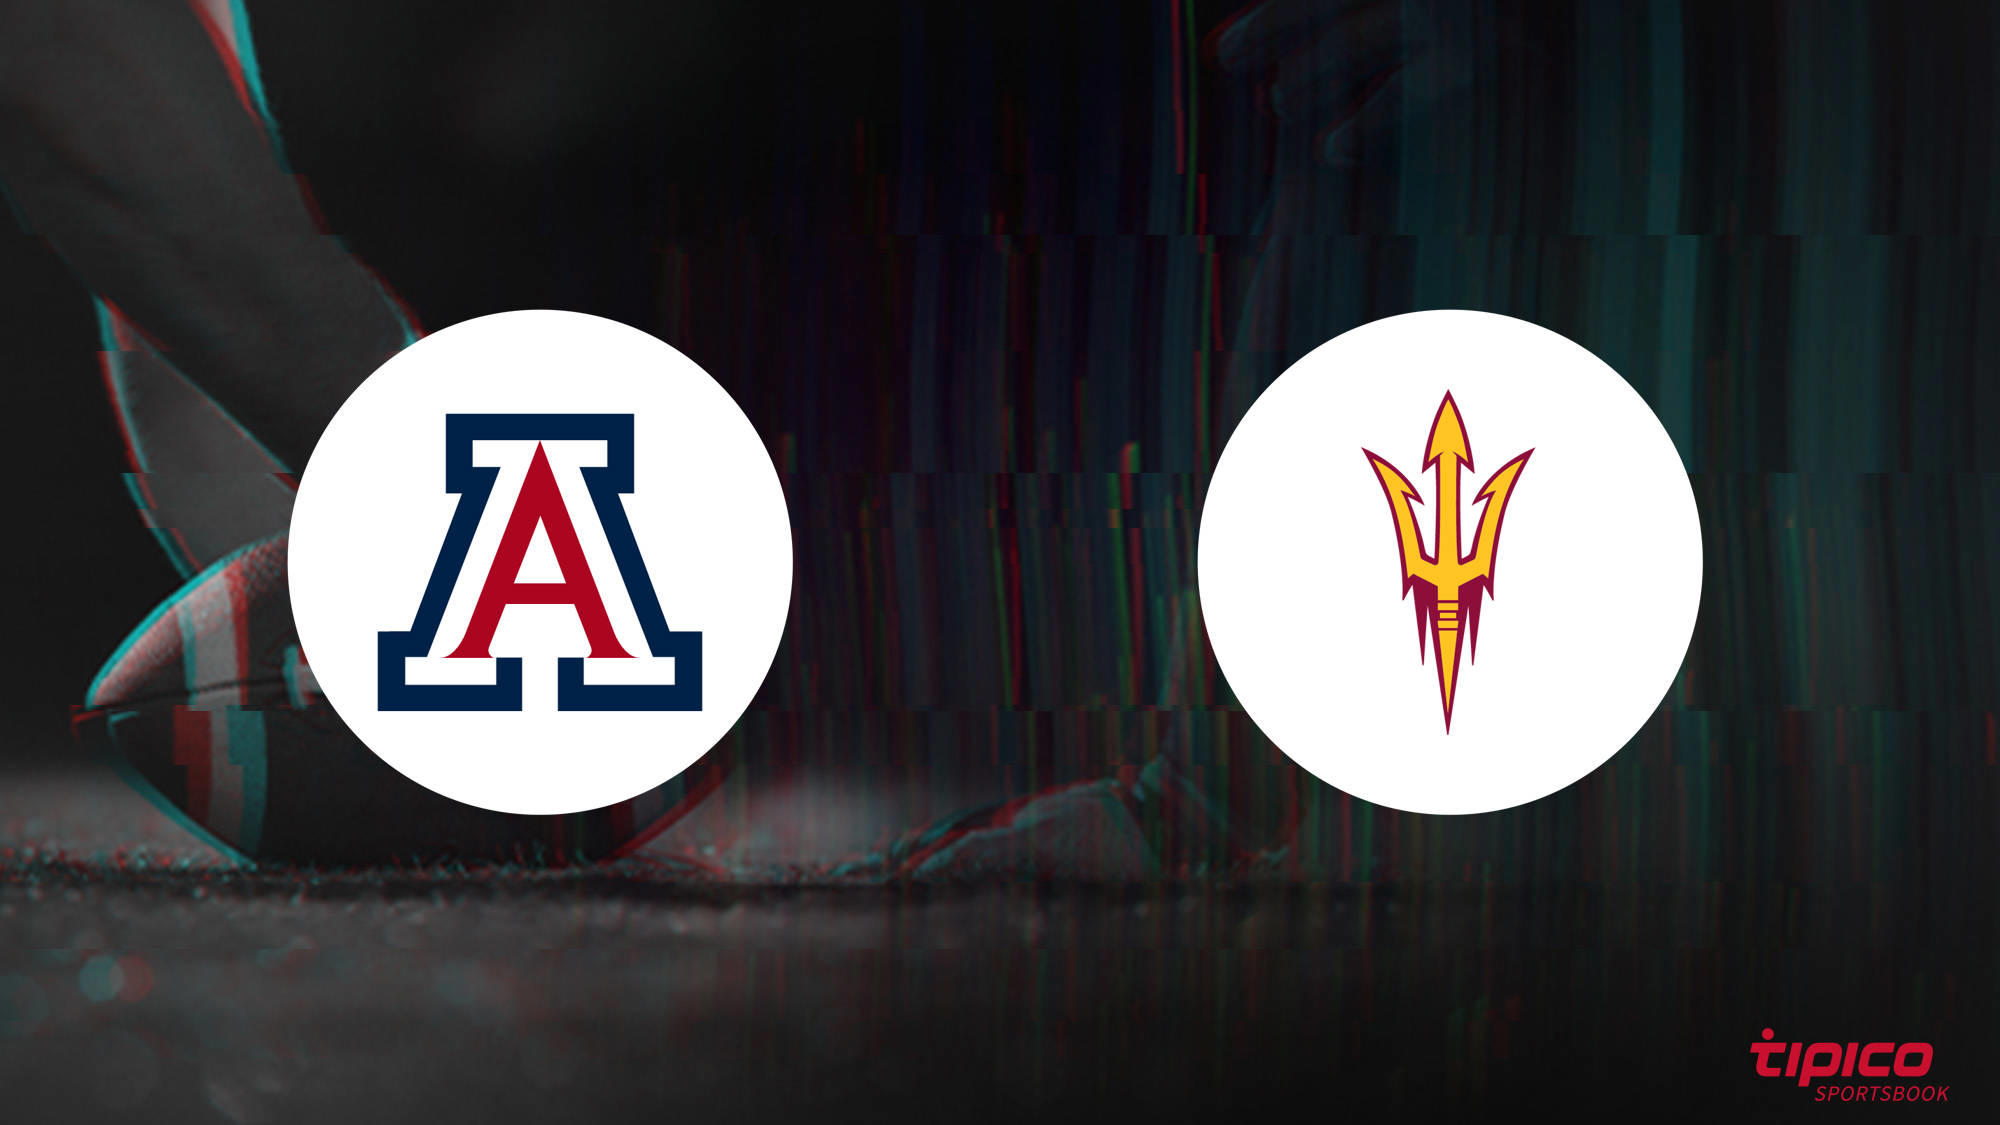 Arizona Wildcats vs. Arizona State Sun Devils Preview